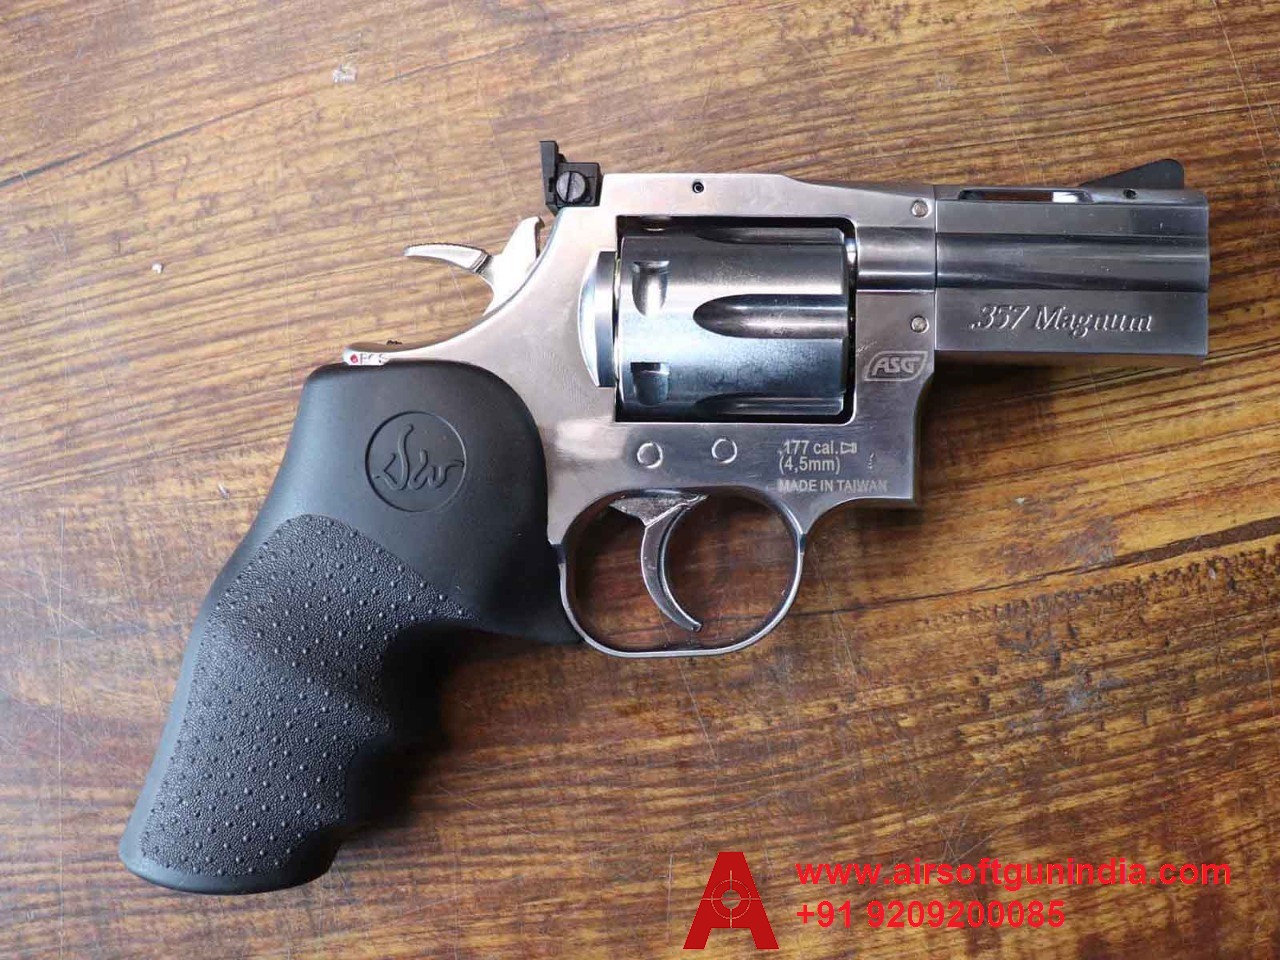 Dan Wesson 715 2.5 Inch .177Cal, 4.5mm Co2 Pellet Air Revolver By Airsoft Gun India